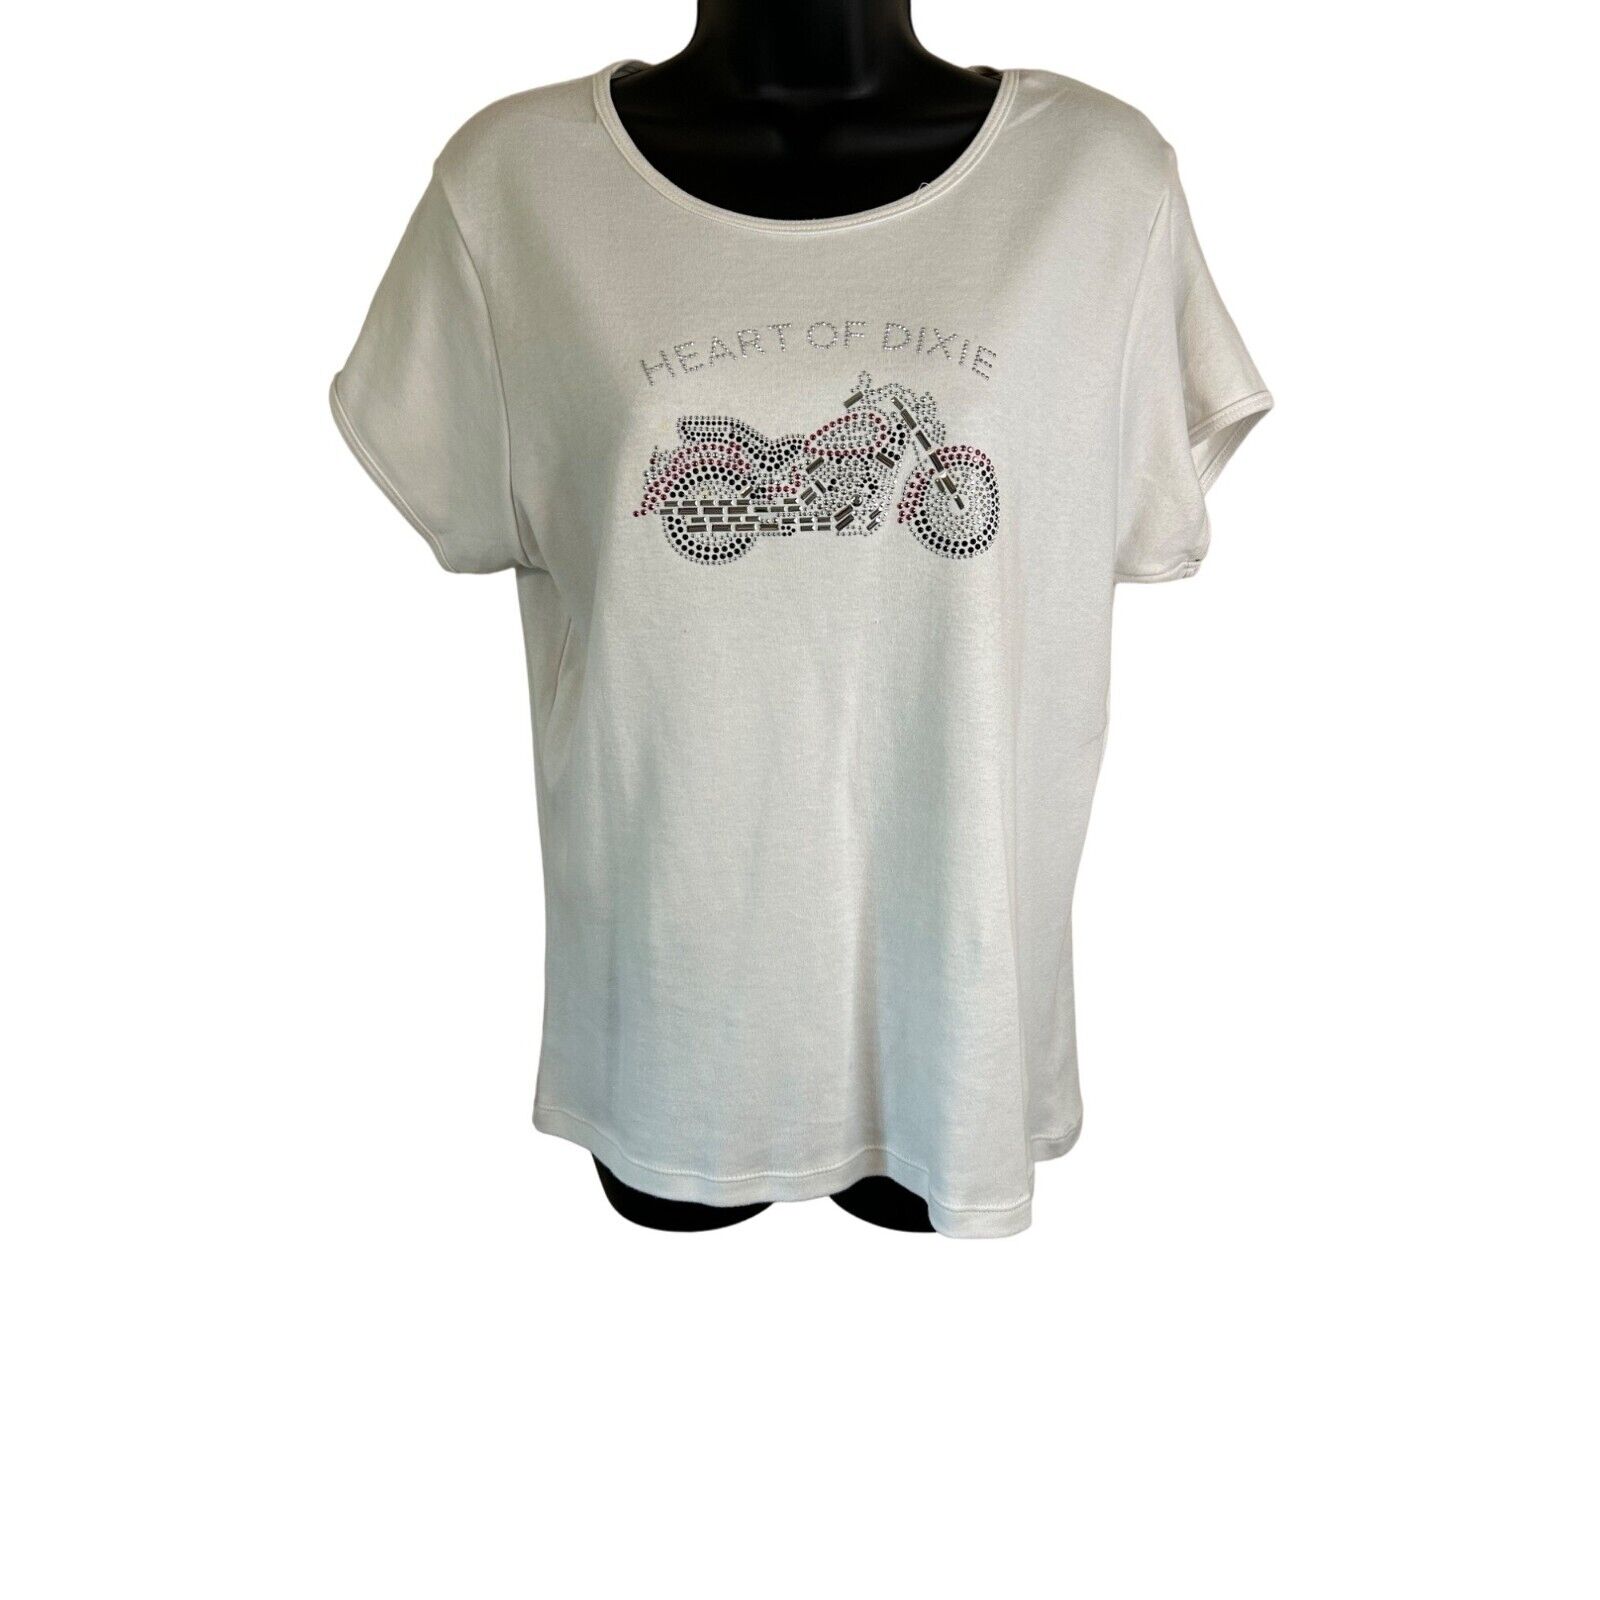 Harley Davidson Studded Detail Motorcycle White Tee Shirt Size XL